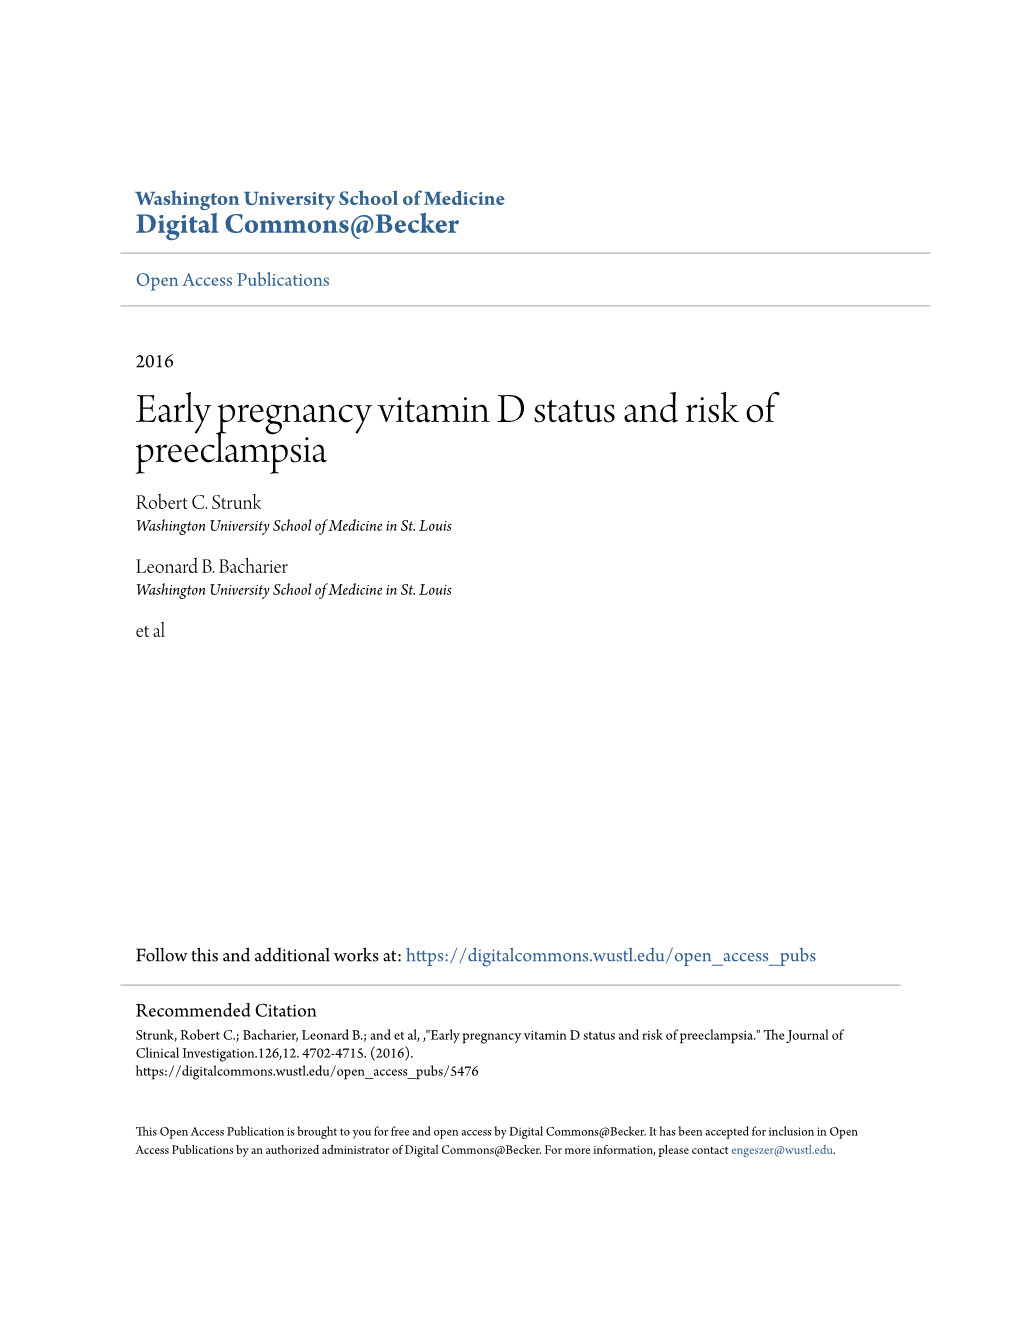 Early Pregnancy Vitamin D Status and Risk of Preeclampsia Robert C